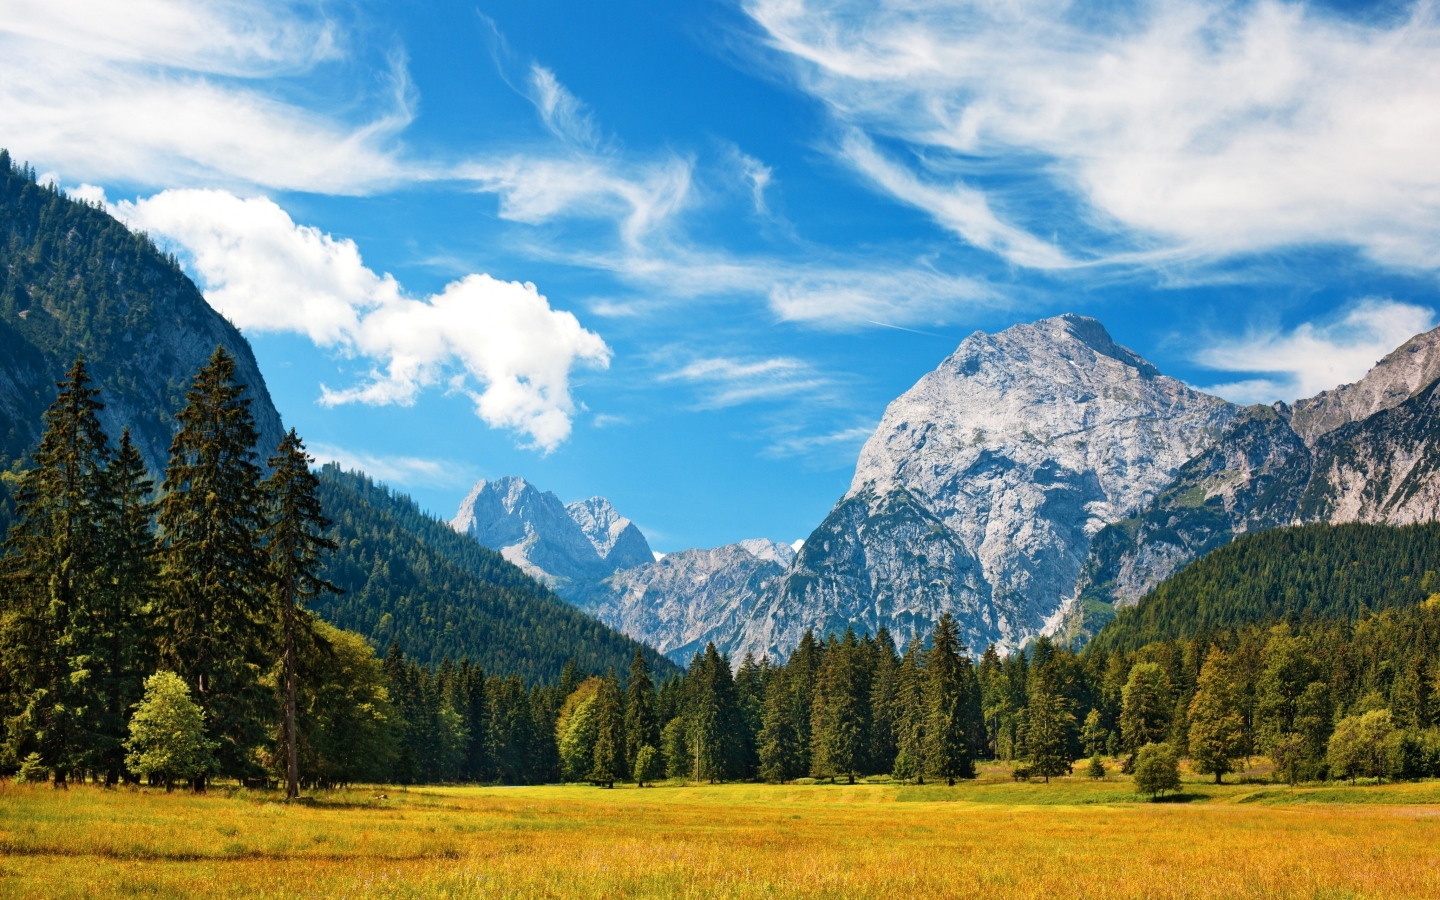 Stunning Mountain Landscape for 1440 x 900 widescreen resolution